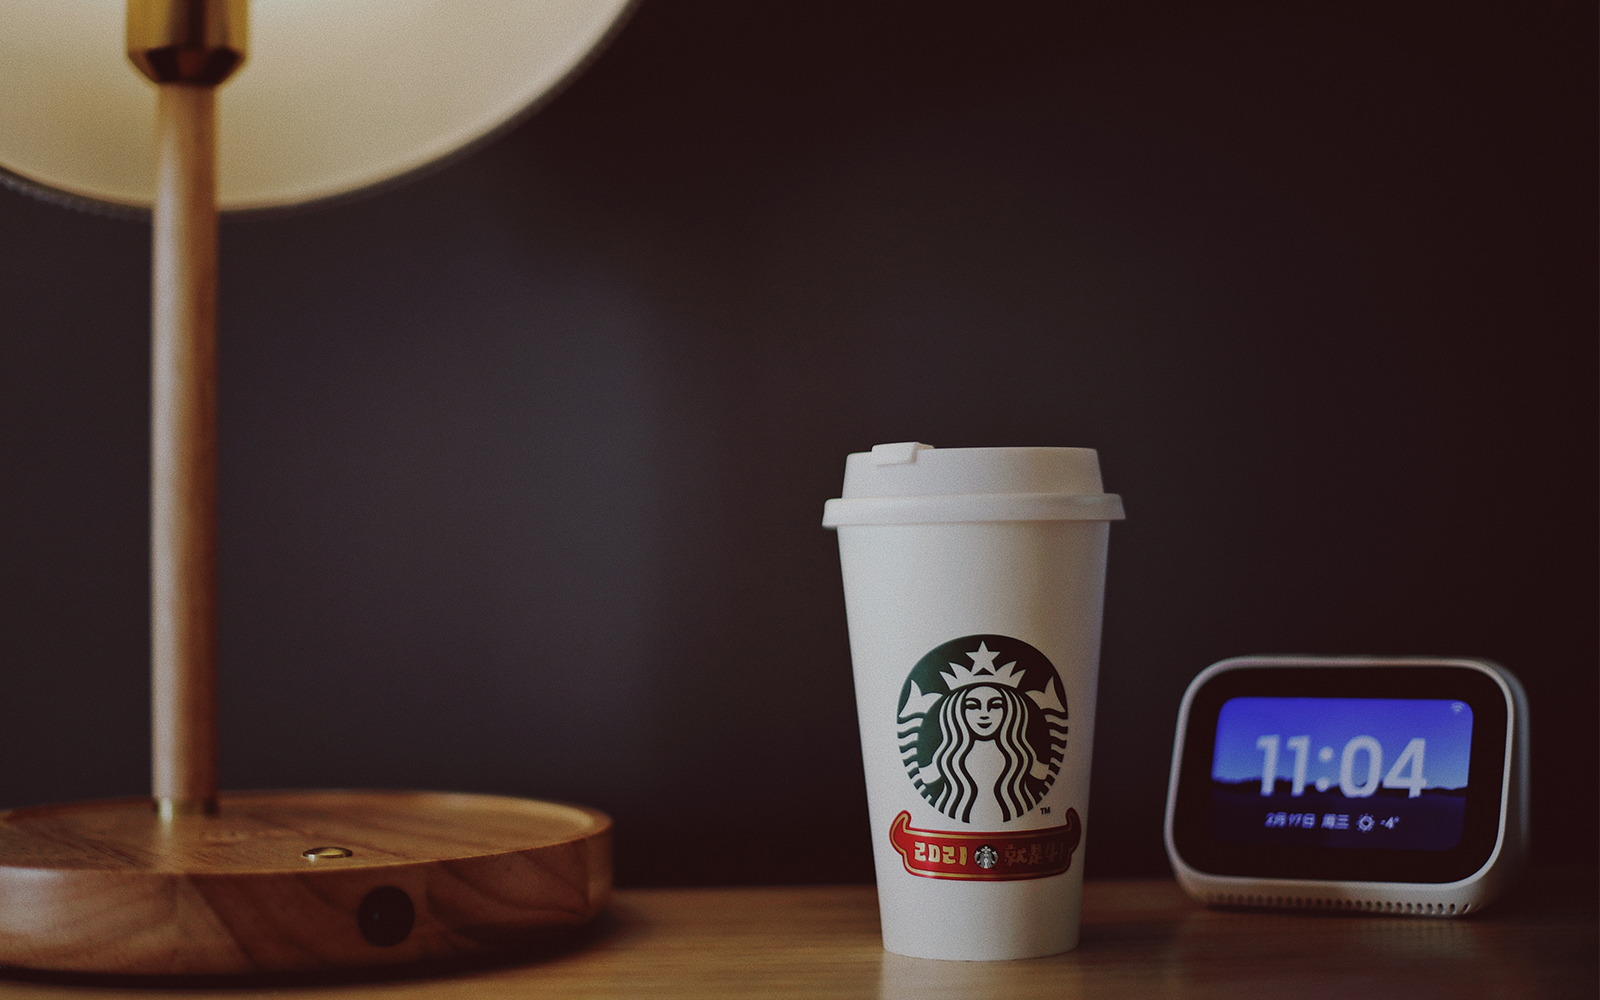 Font design incorporating Starbucks theme elements